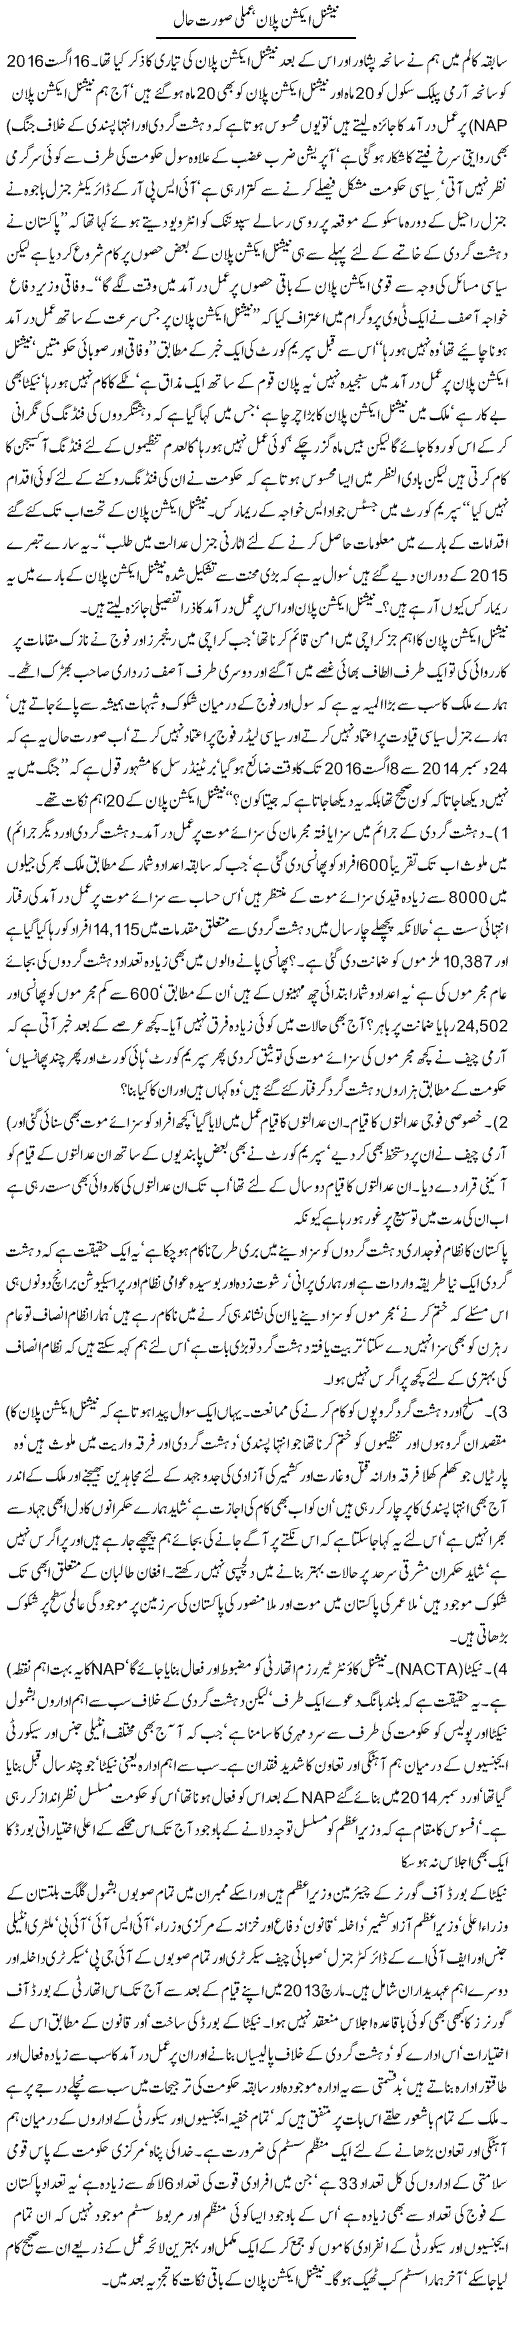 National Action Plan, amli surat haal | Jamil Marghuz | Daily Urdu Columns